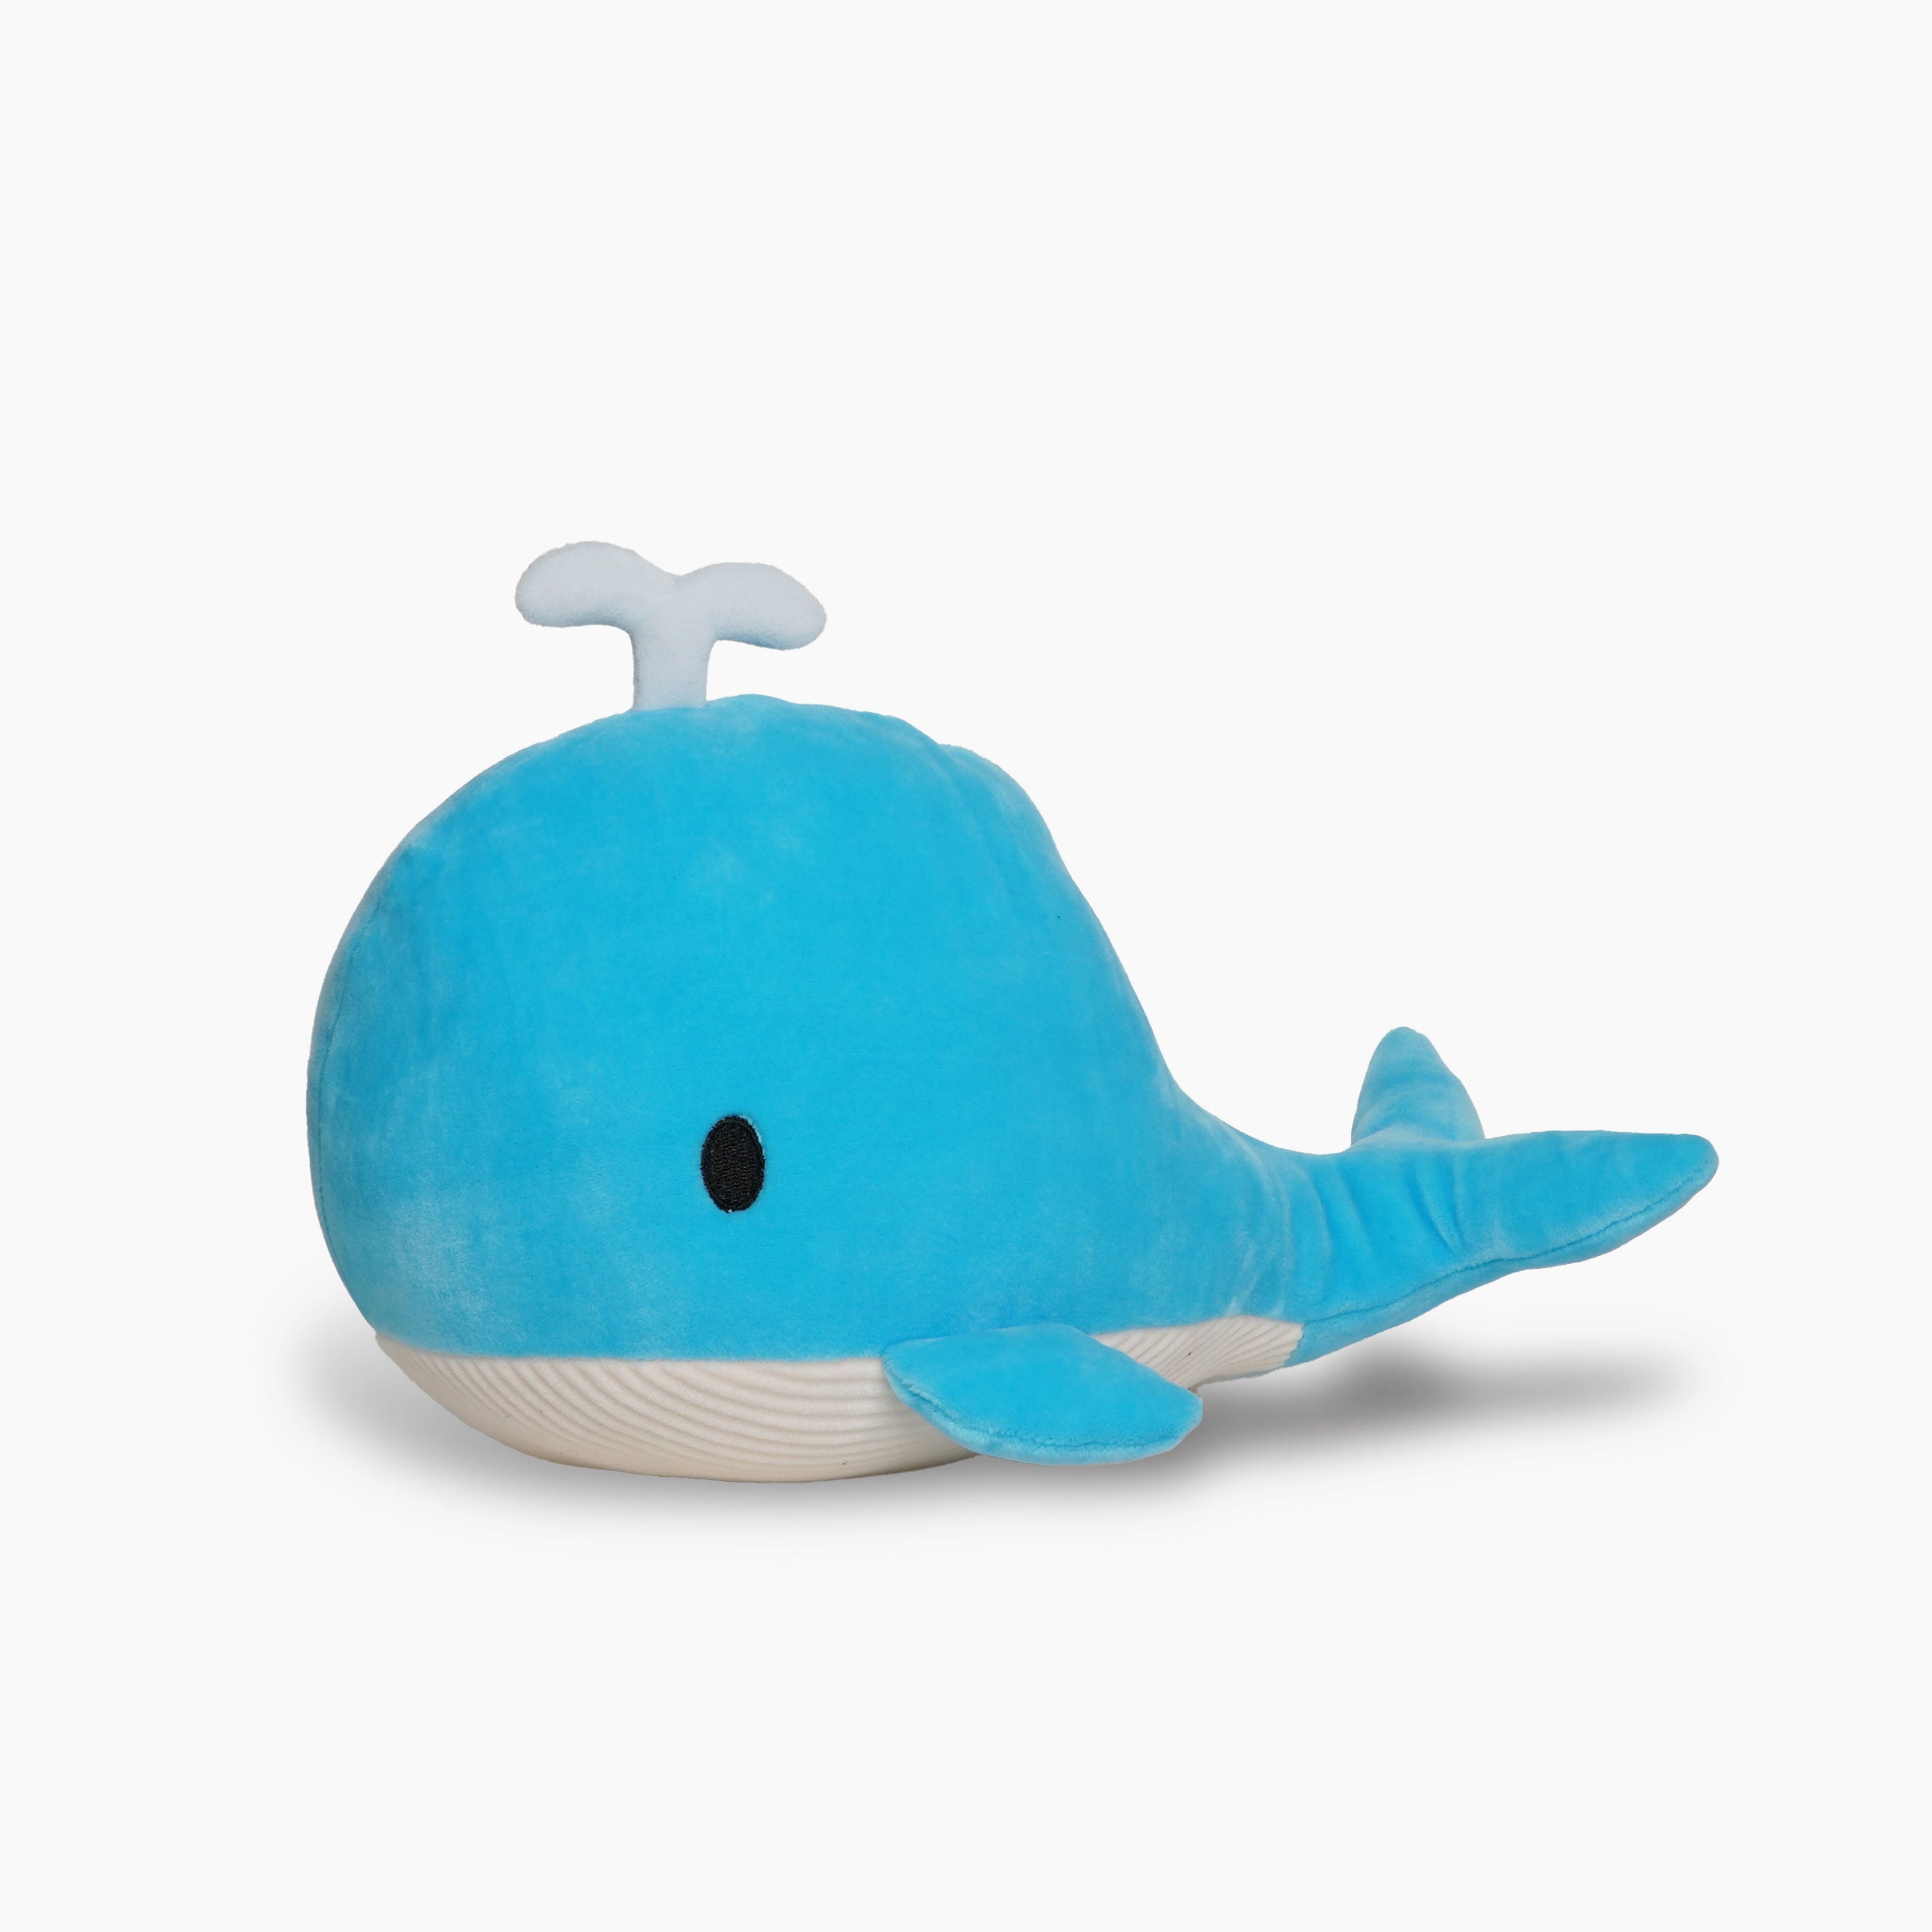 Avocatt Blue Whale Plush Stuffed Animal